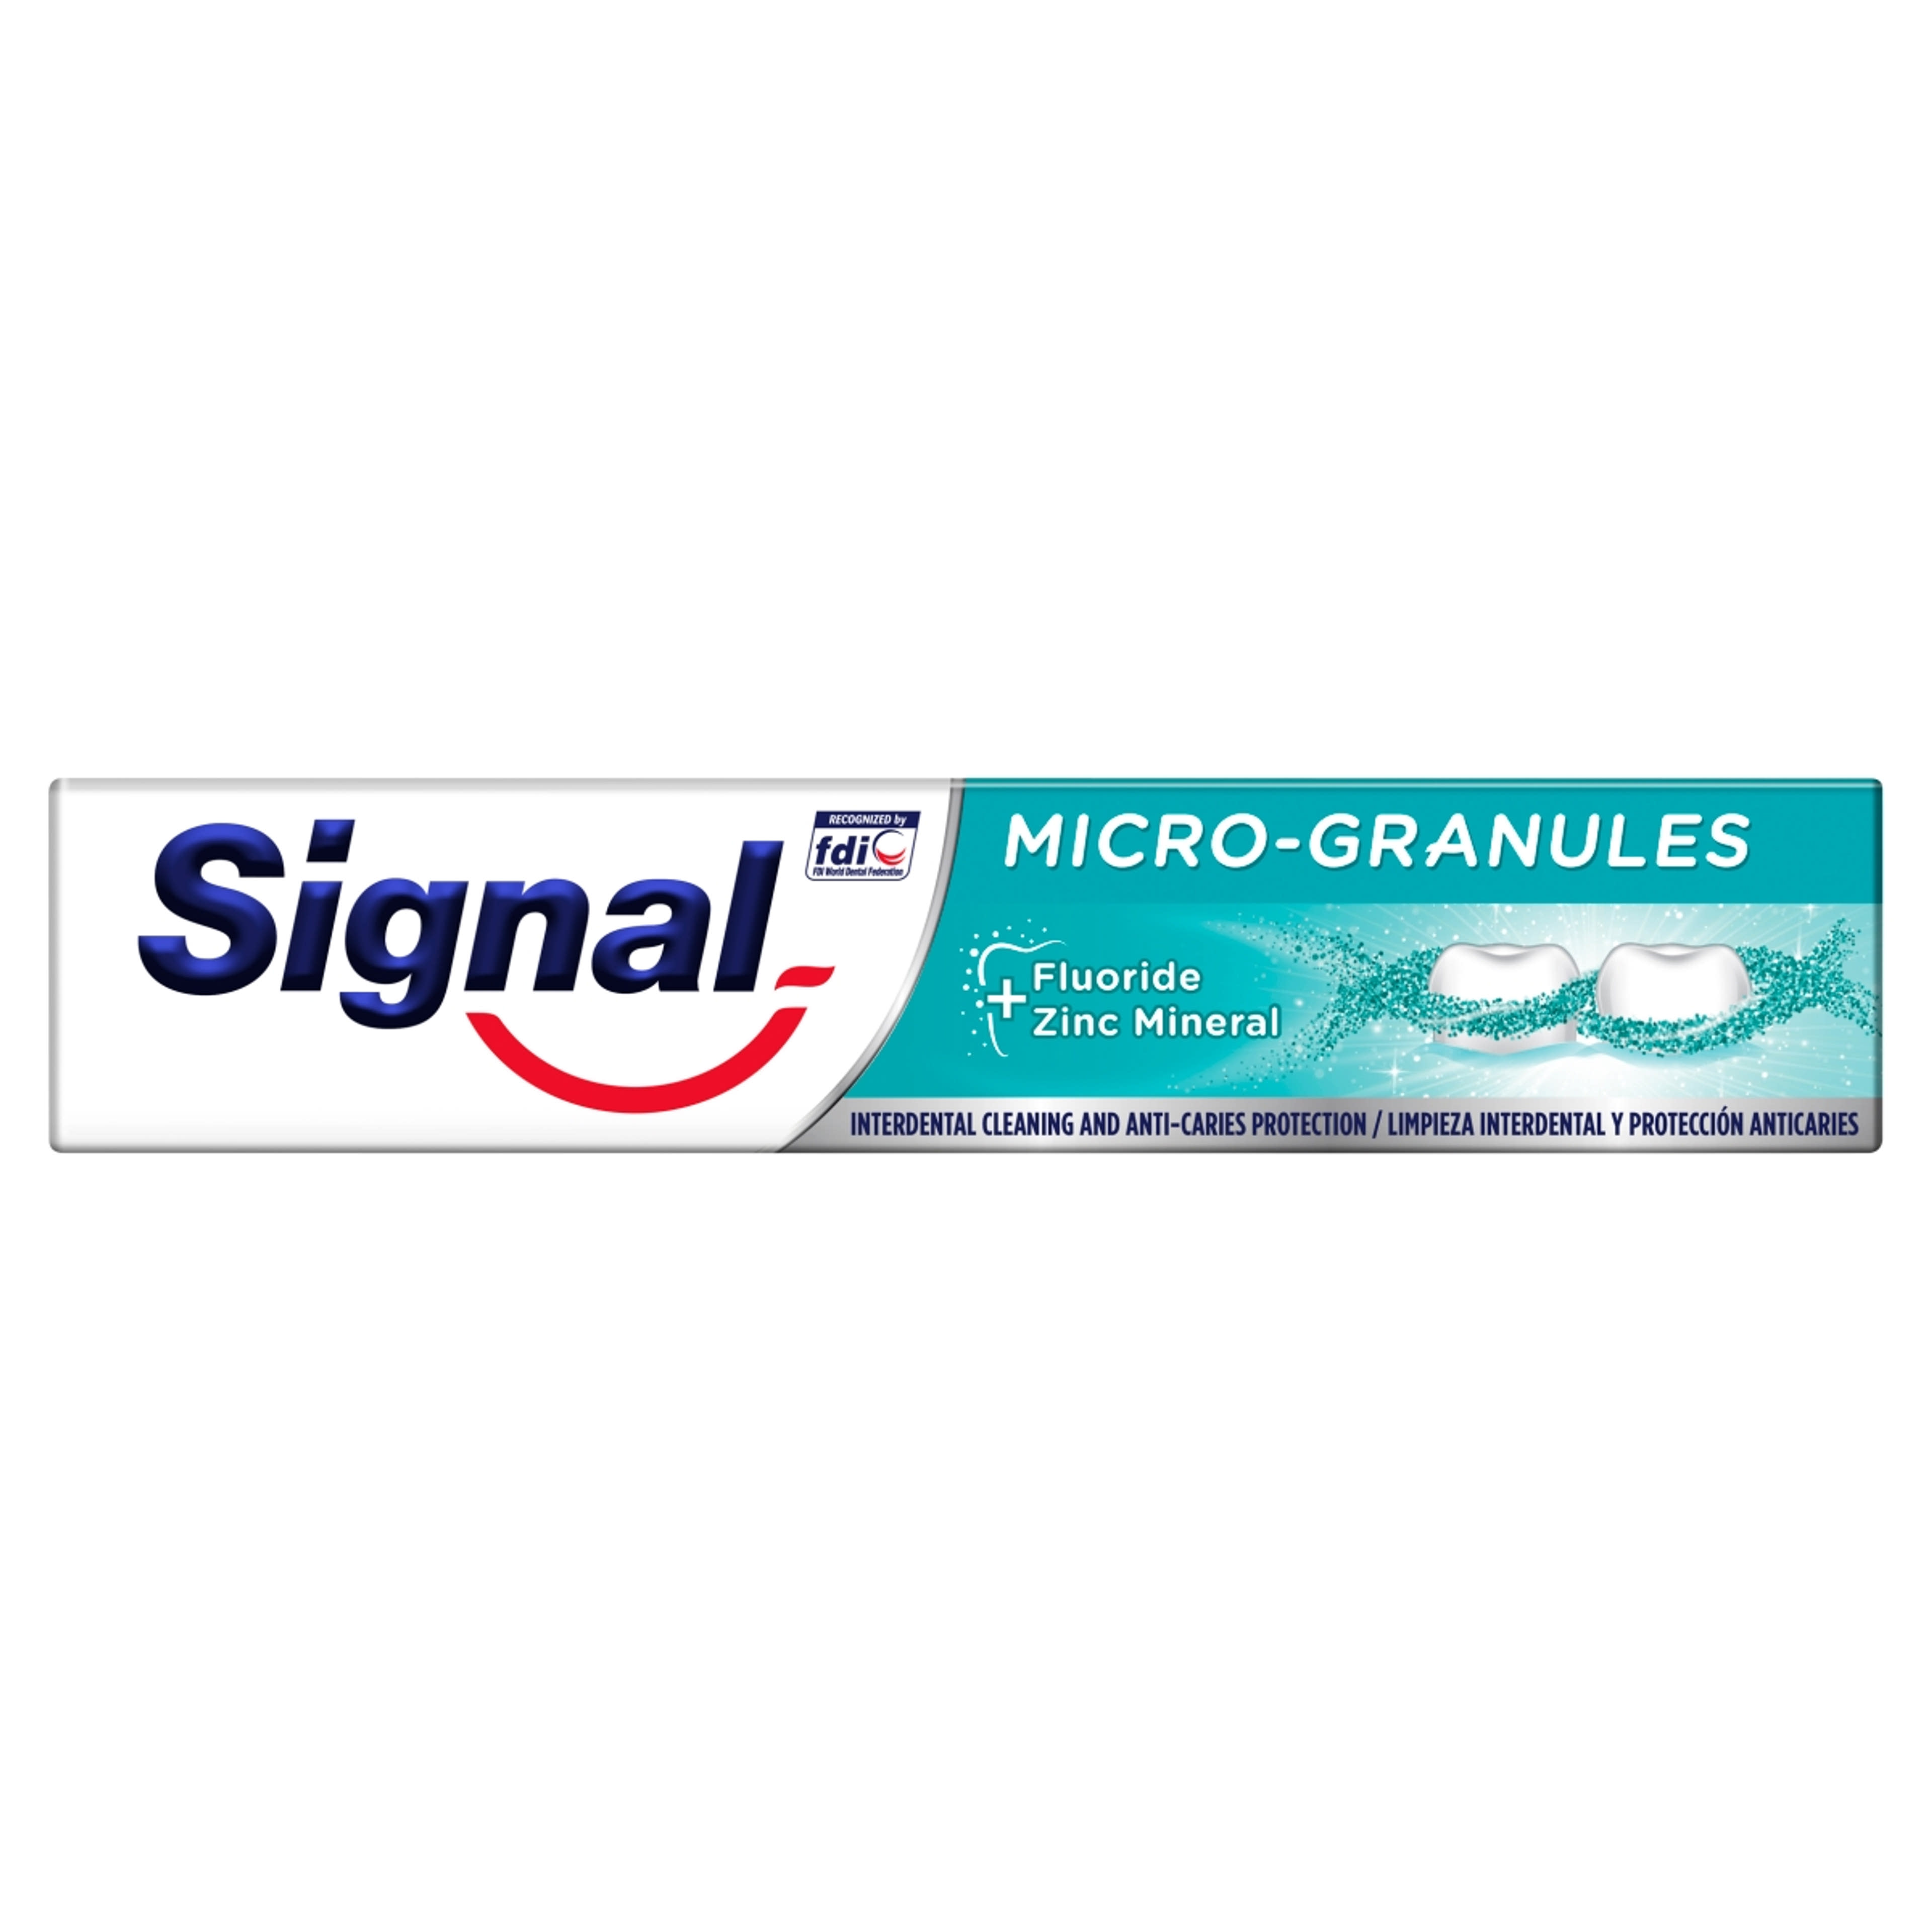 Signal Micro-Granules fogkrém - 75 ml